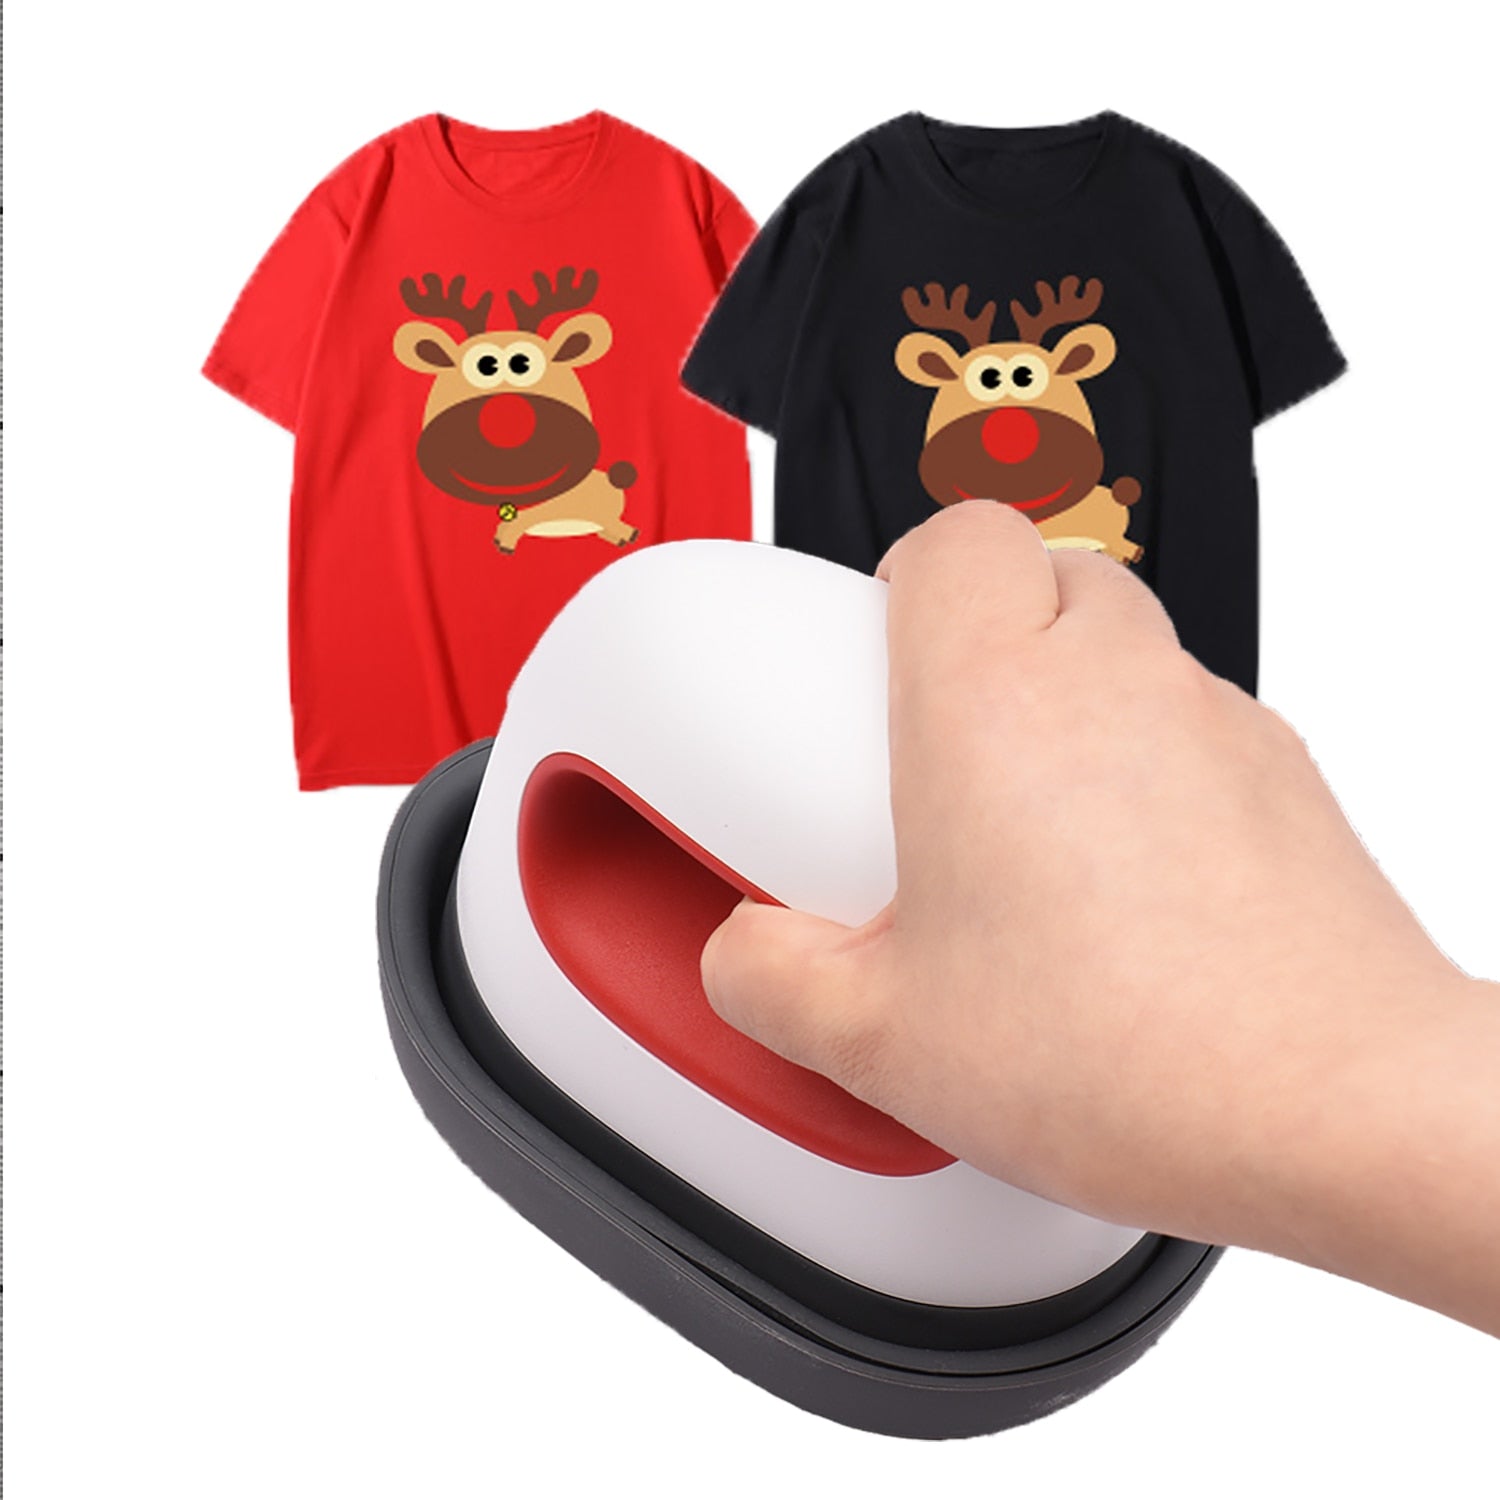 Portable Mini Heat Press Machine T-Shirt Printing DIY Easy Heating Transfer Press Iron Machines for Clothes Bags Hats - OZN Shopping